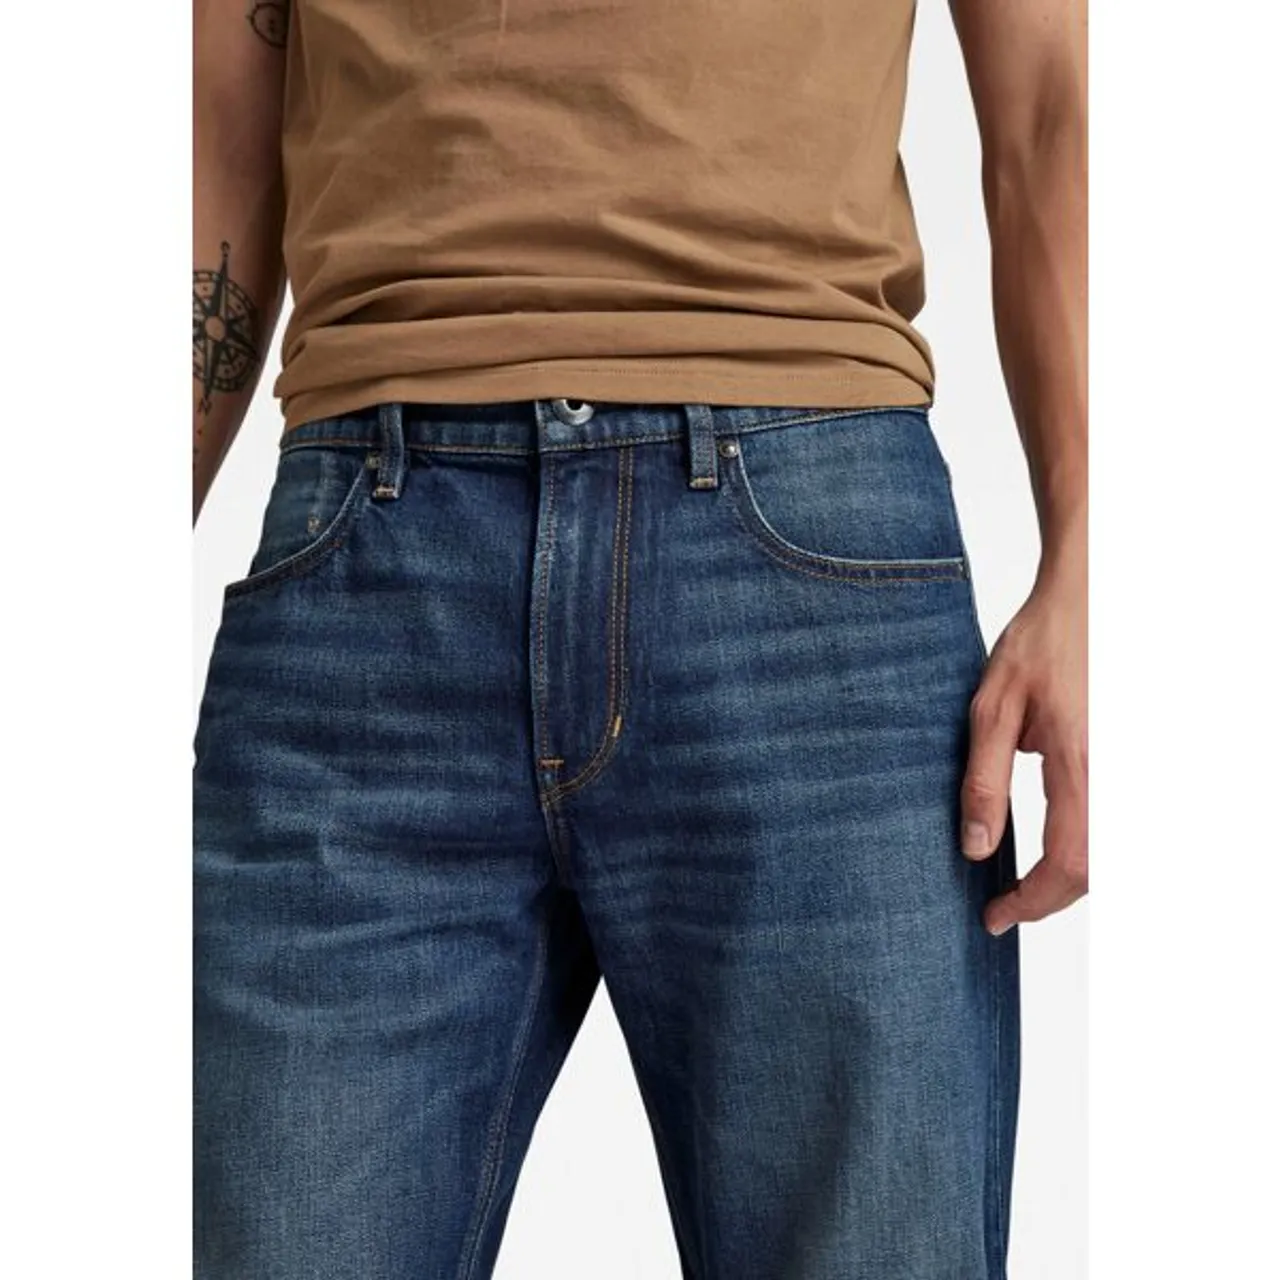 Jeansshorts G-STAR RAW "Mosa" Gr. 32, N-Gr, blau (worn in isola night) Herren Jeans Shorts